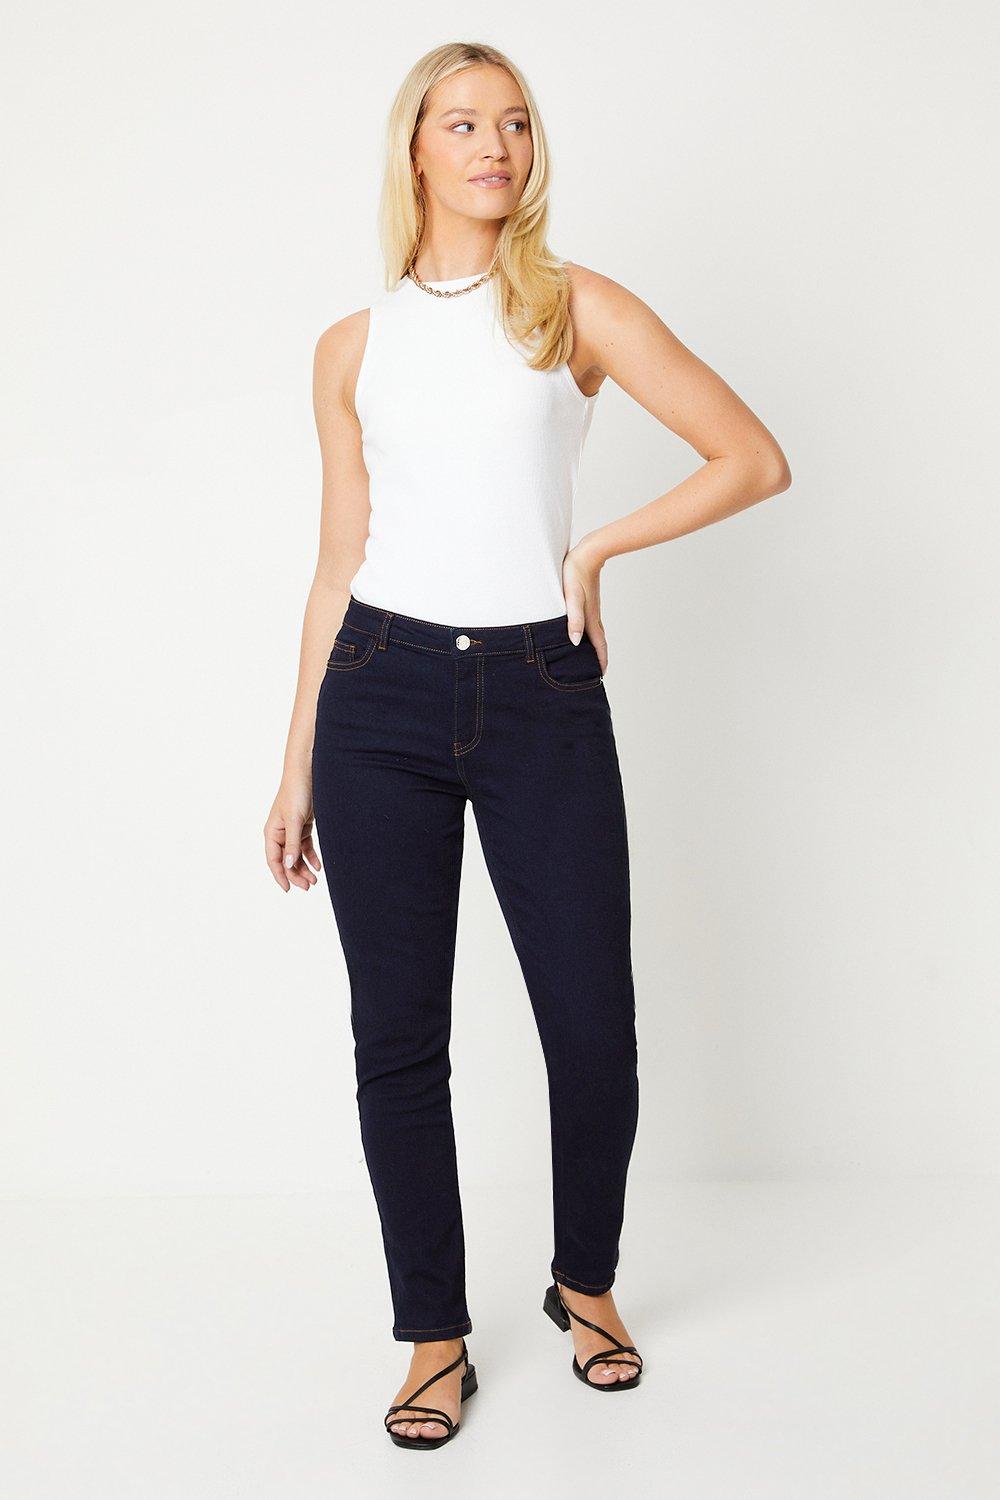 Women’s Comfort Stretch Slim Jeans - indigo - 8